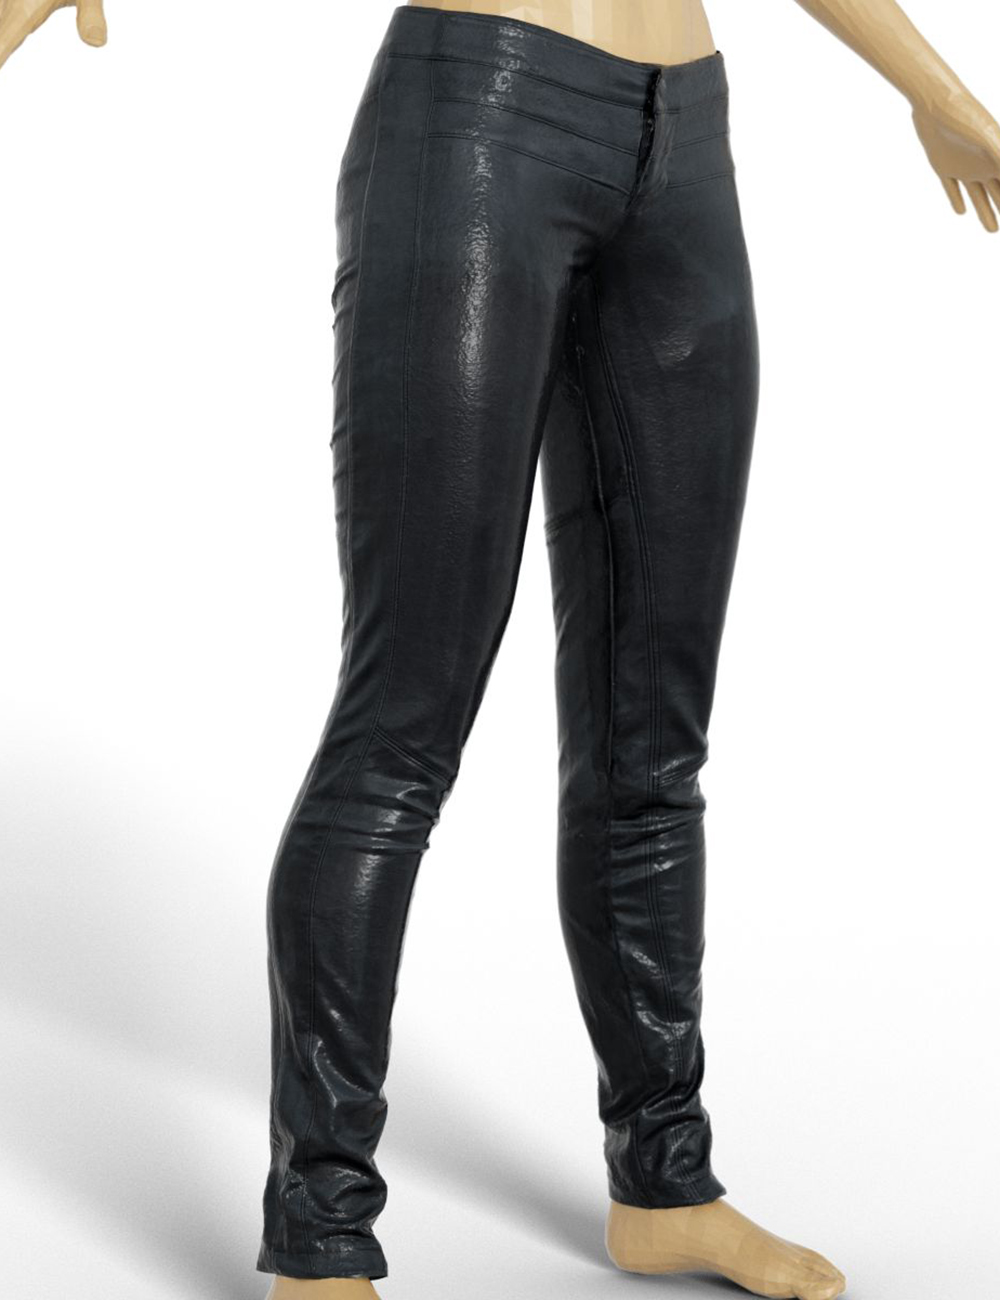 OBJ - Shiny Leather Pants by: Polygonal Miniatures, 3D Models by Daz 3D